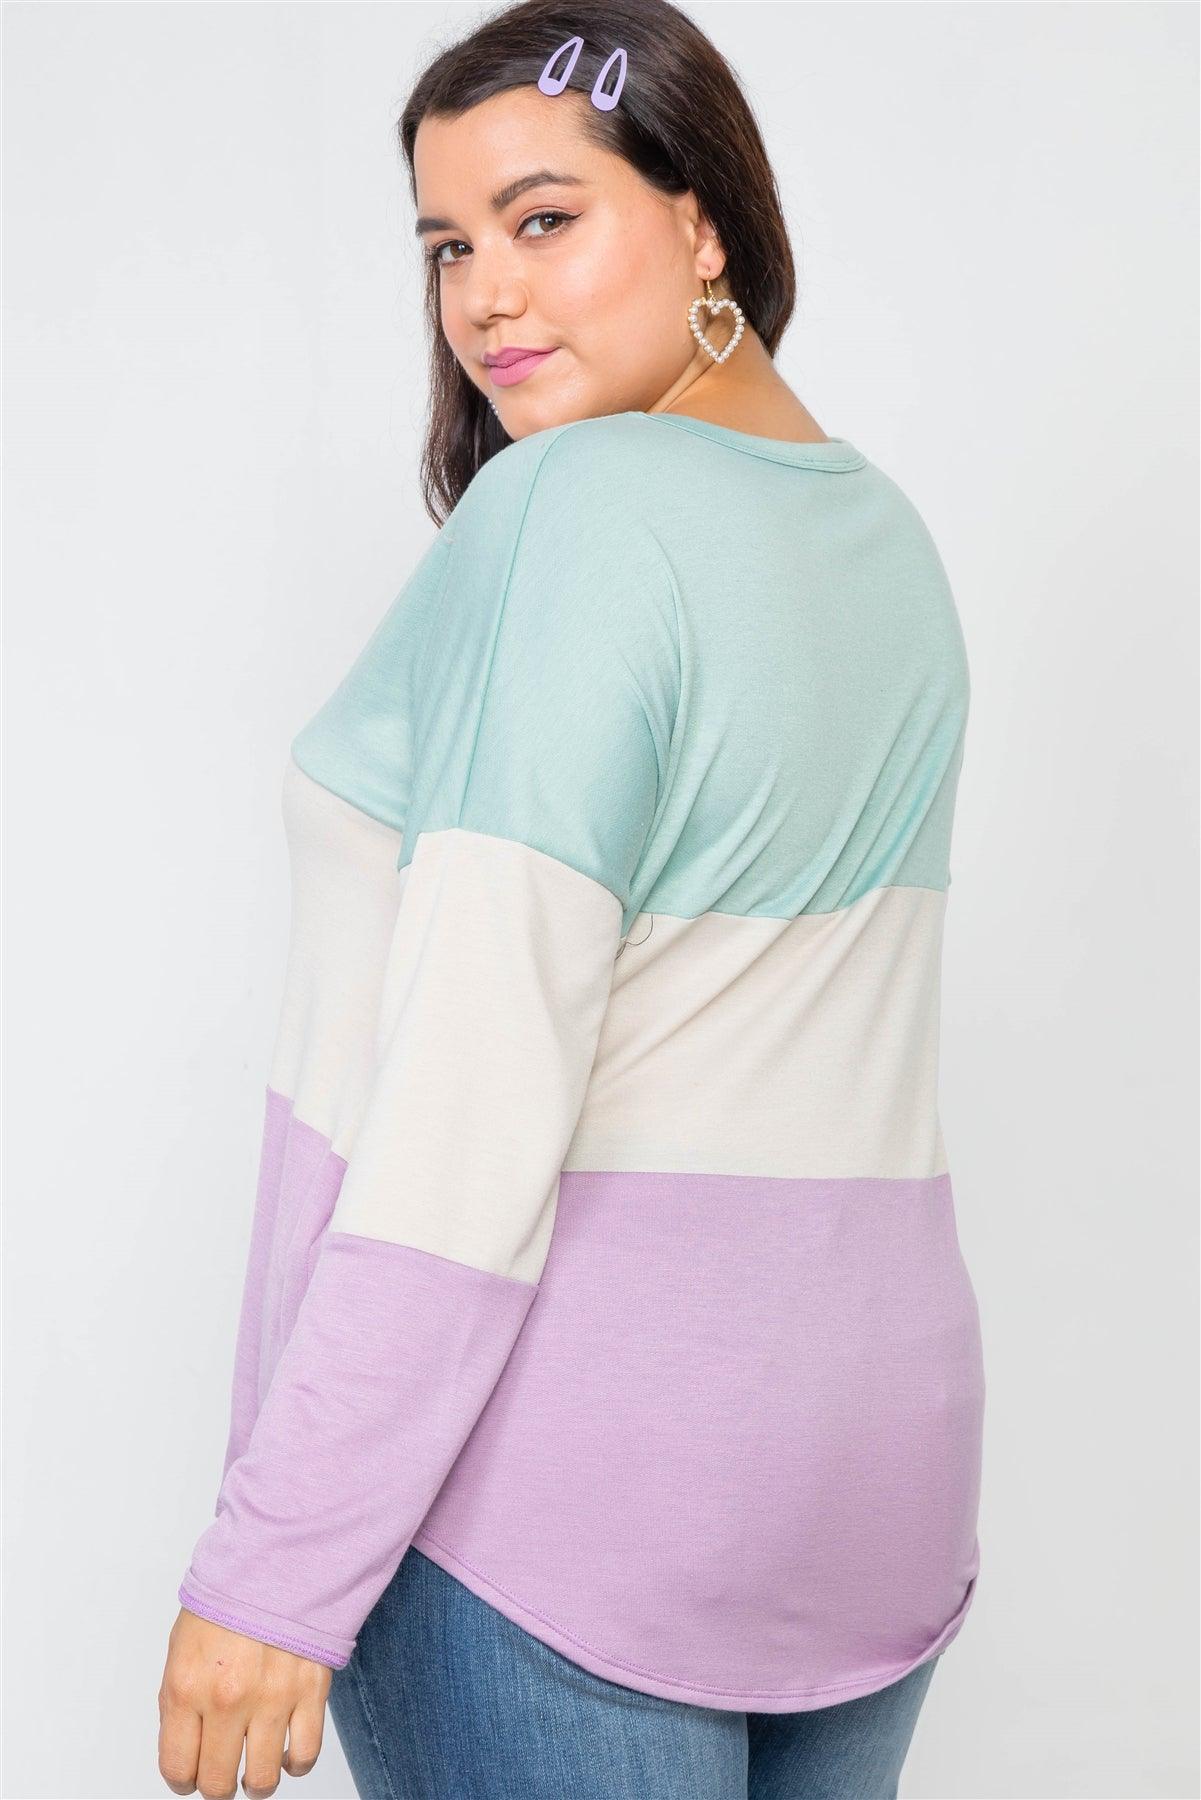 Plus Size Green Lavender Colorblock Soft Knit Top